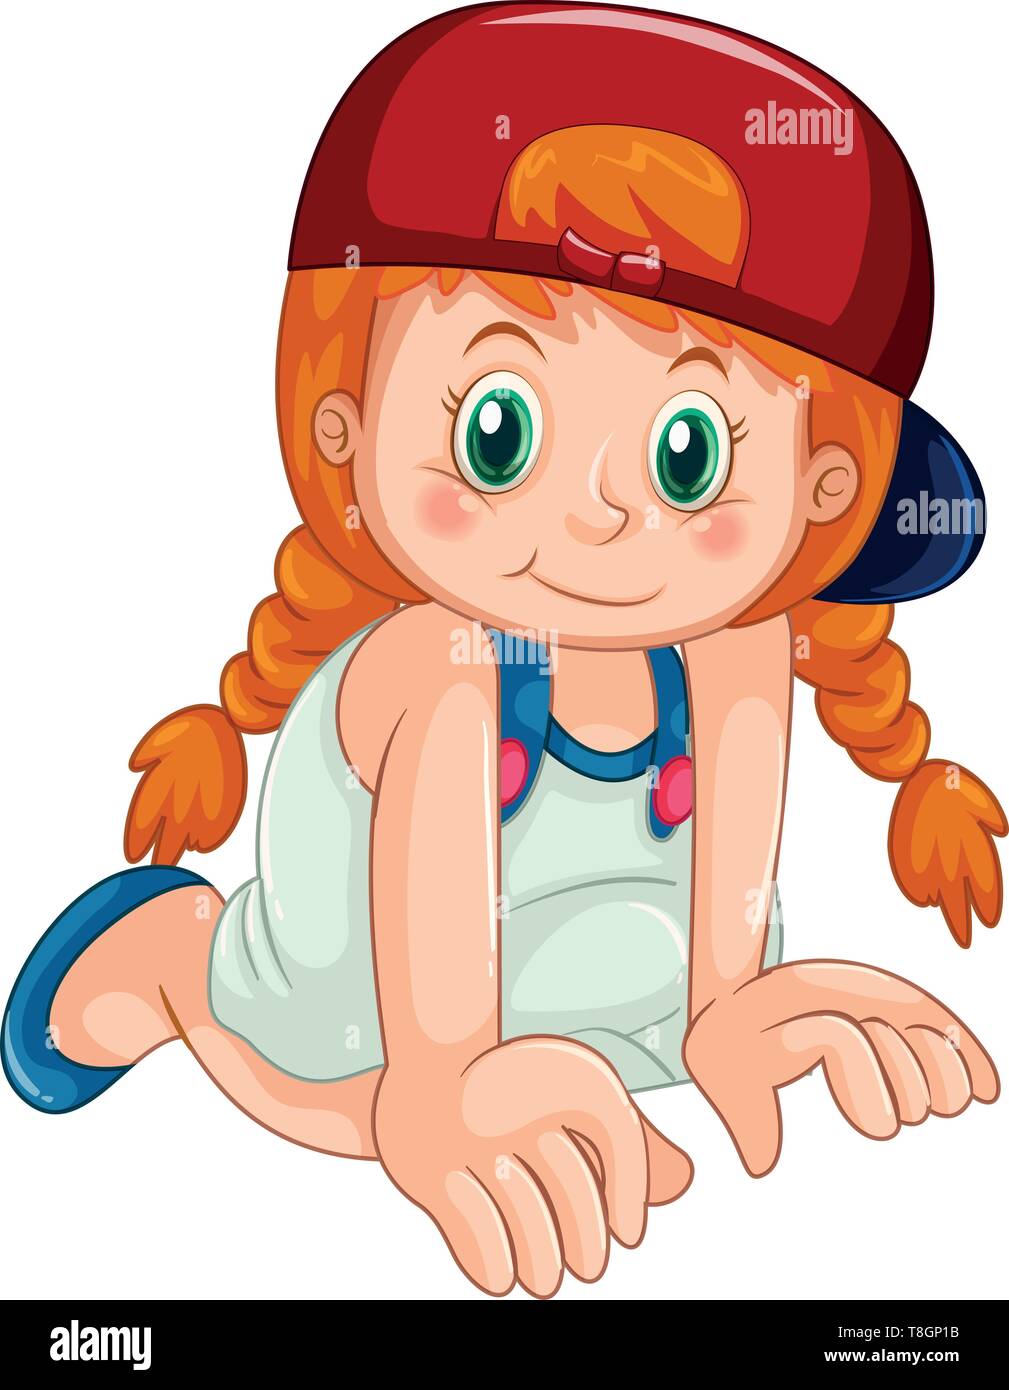 A cute girl with braided hair illustration Stock Vector